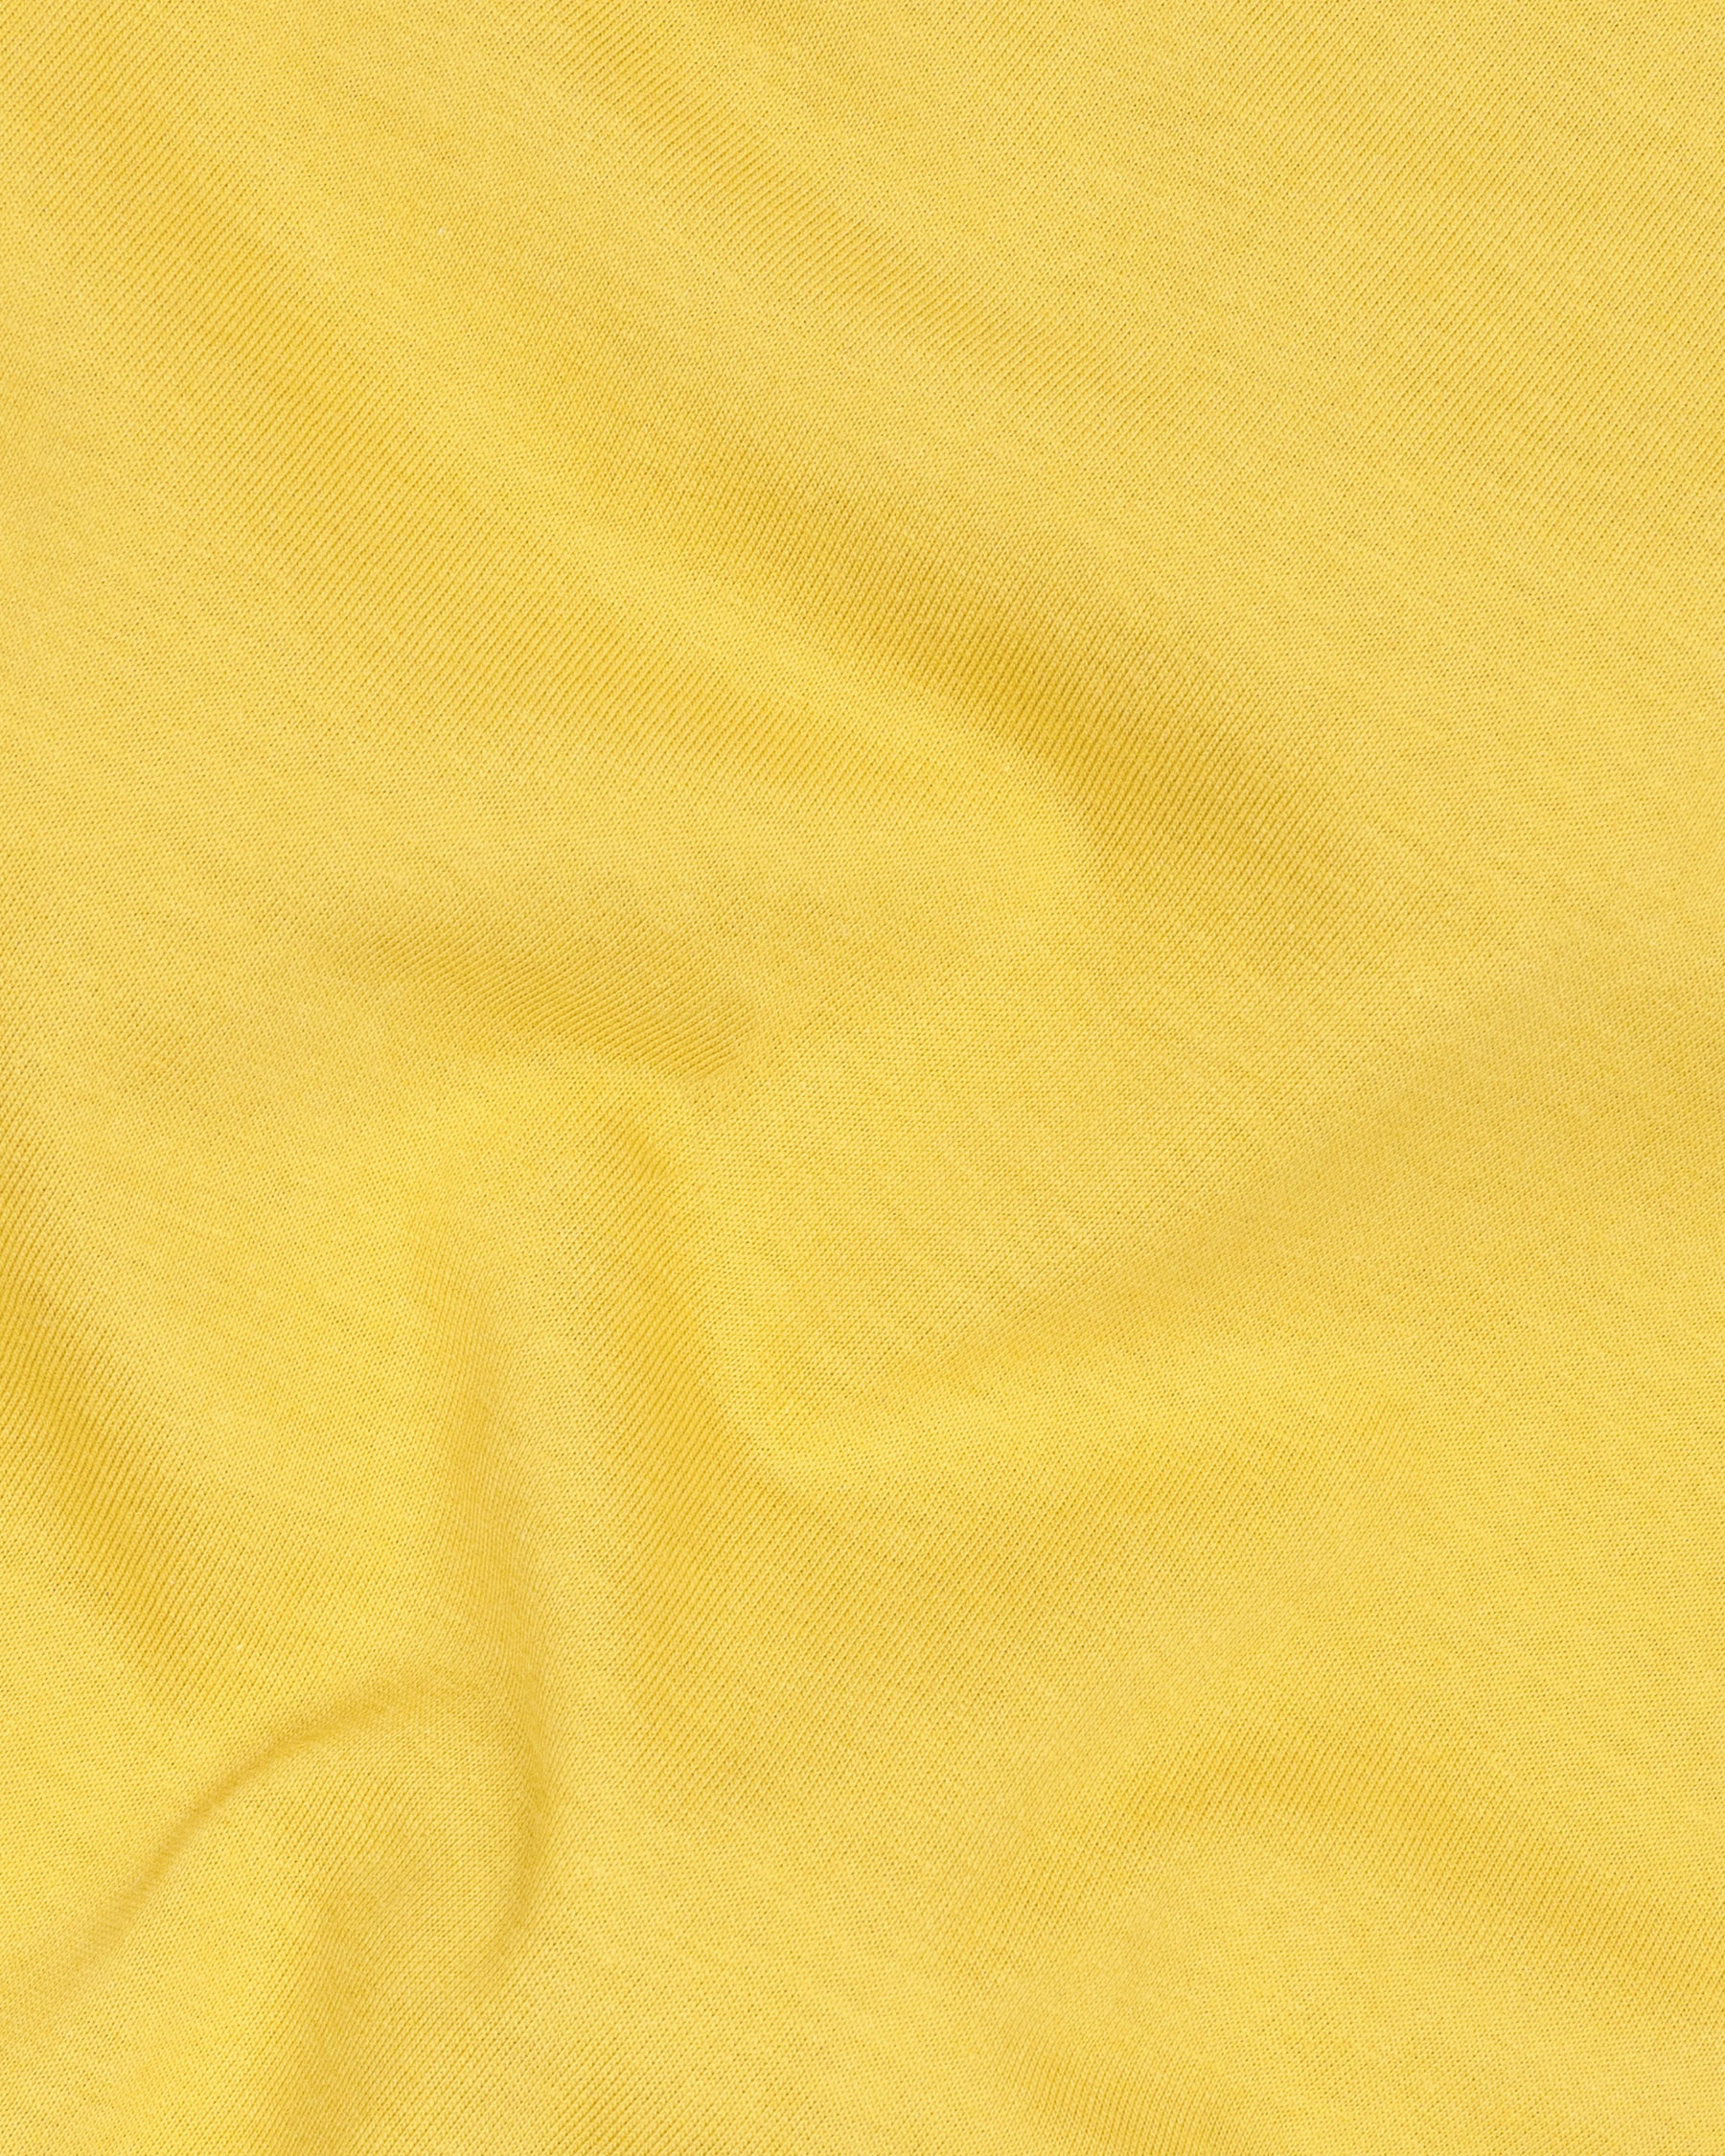 Goldenrod Yellow Full Sleeve Premium Cotton Jersey Sweatshirt TS459-S, TS459-M, TS459-L, TS459-XL, TS459-XXL